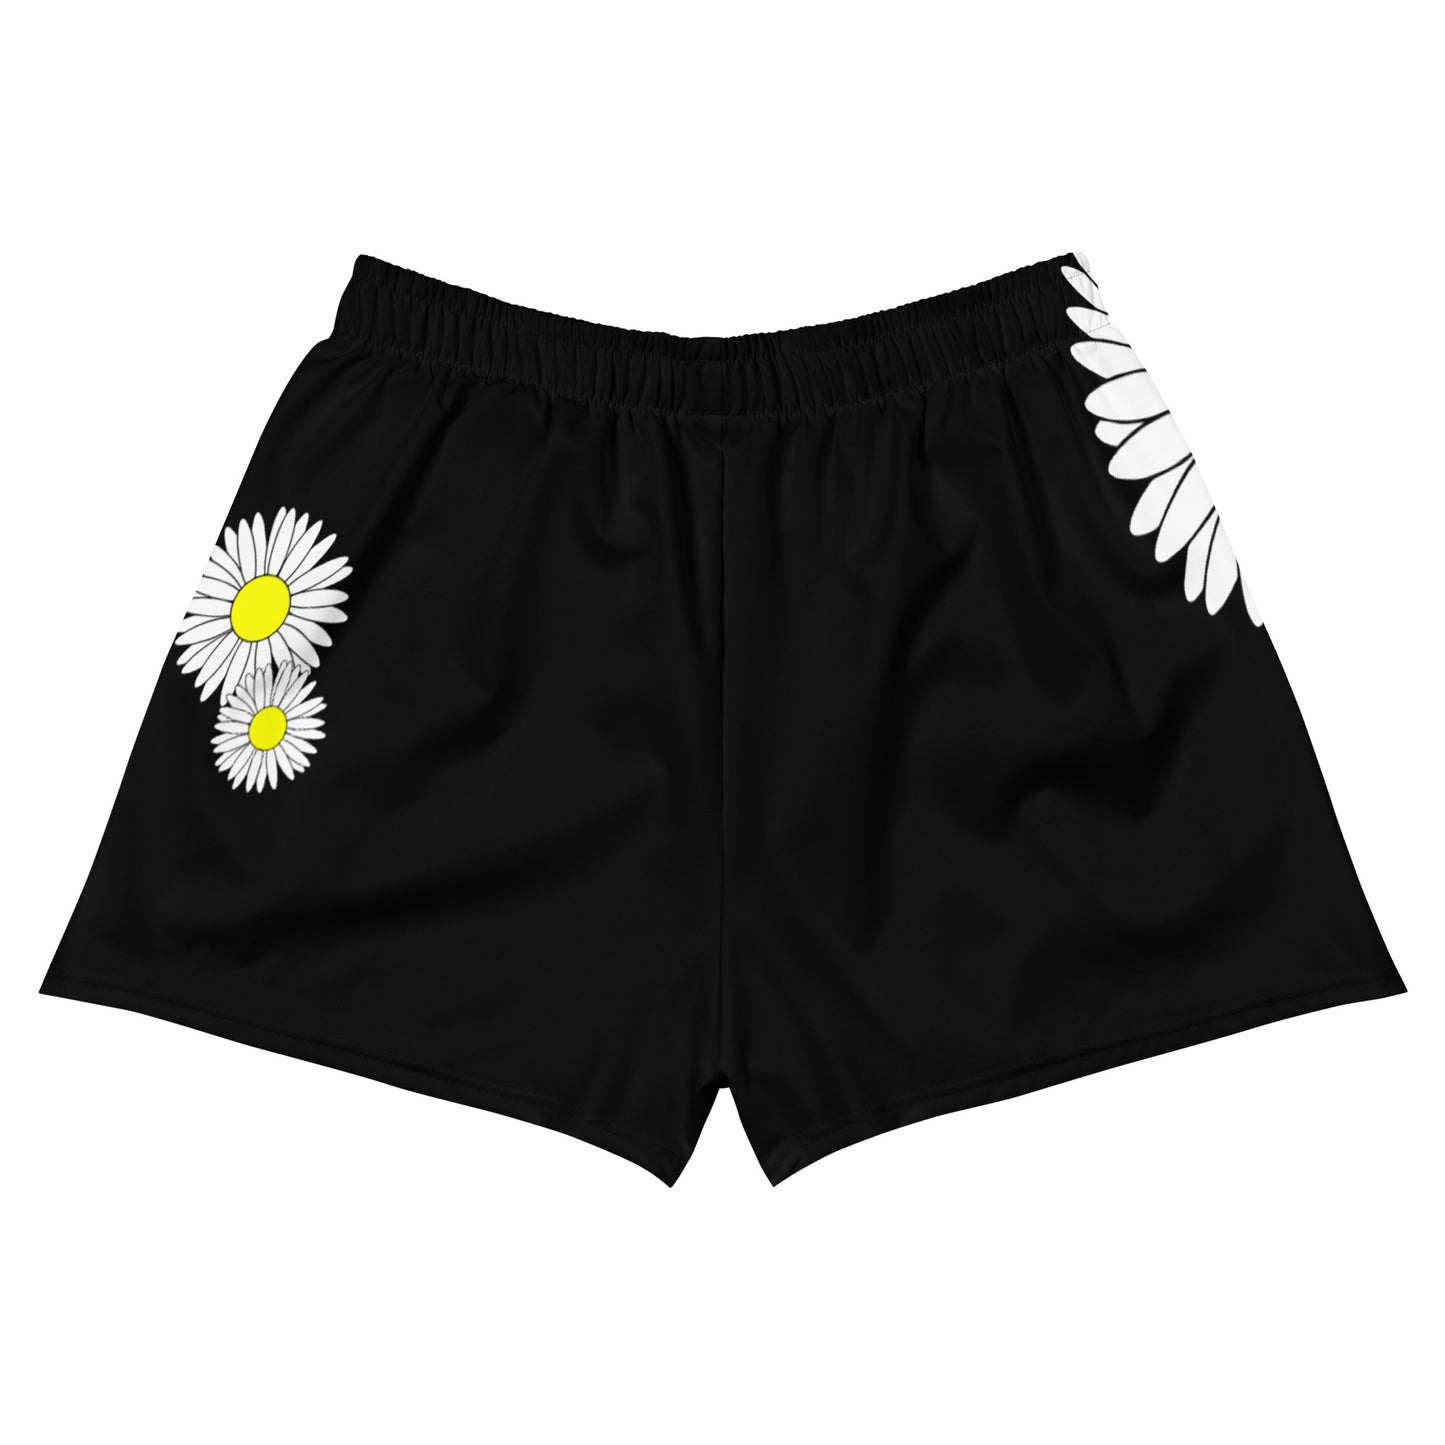 Women’s Flowers Athletic Shorts